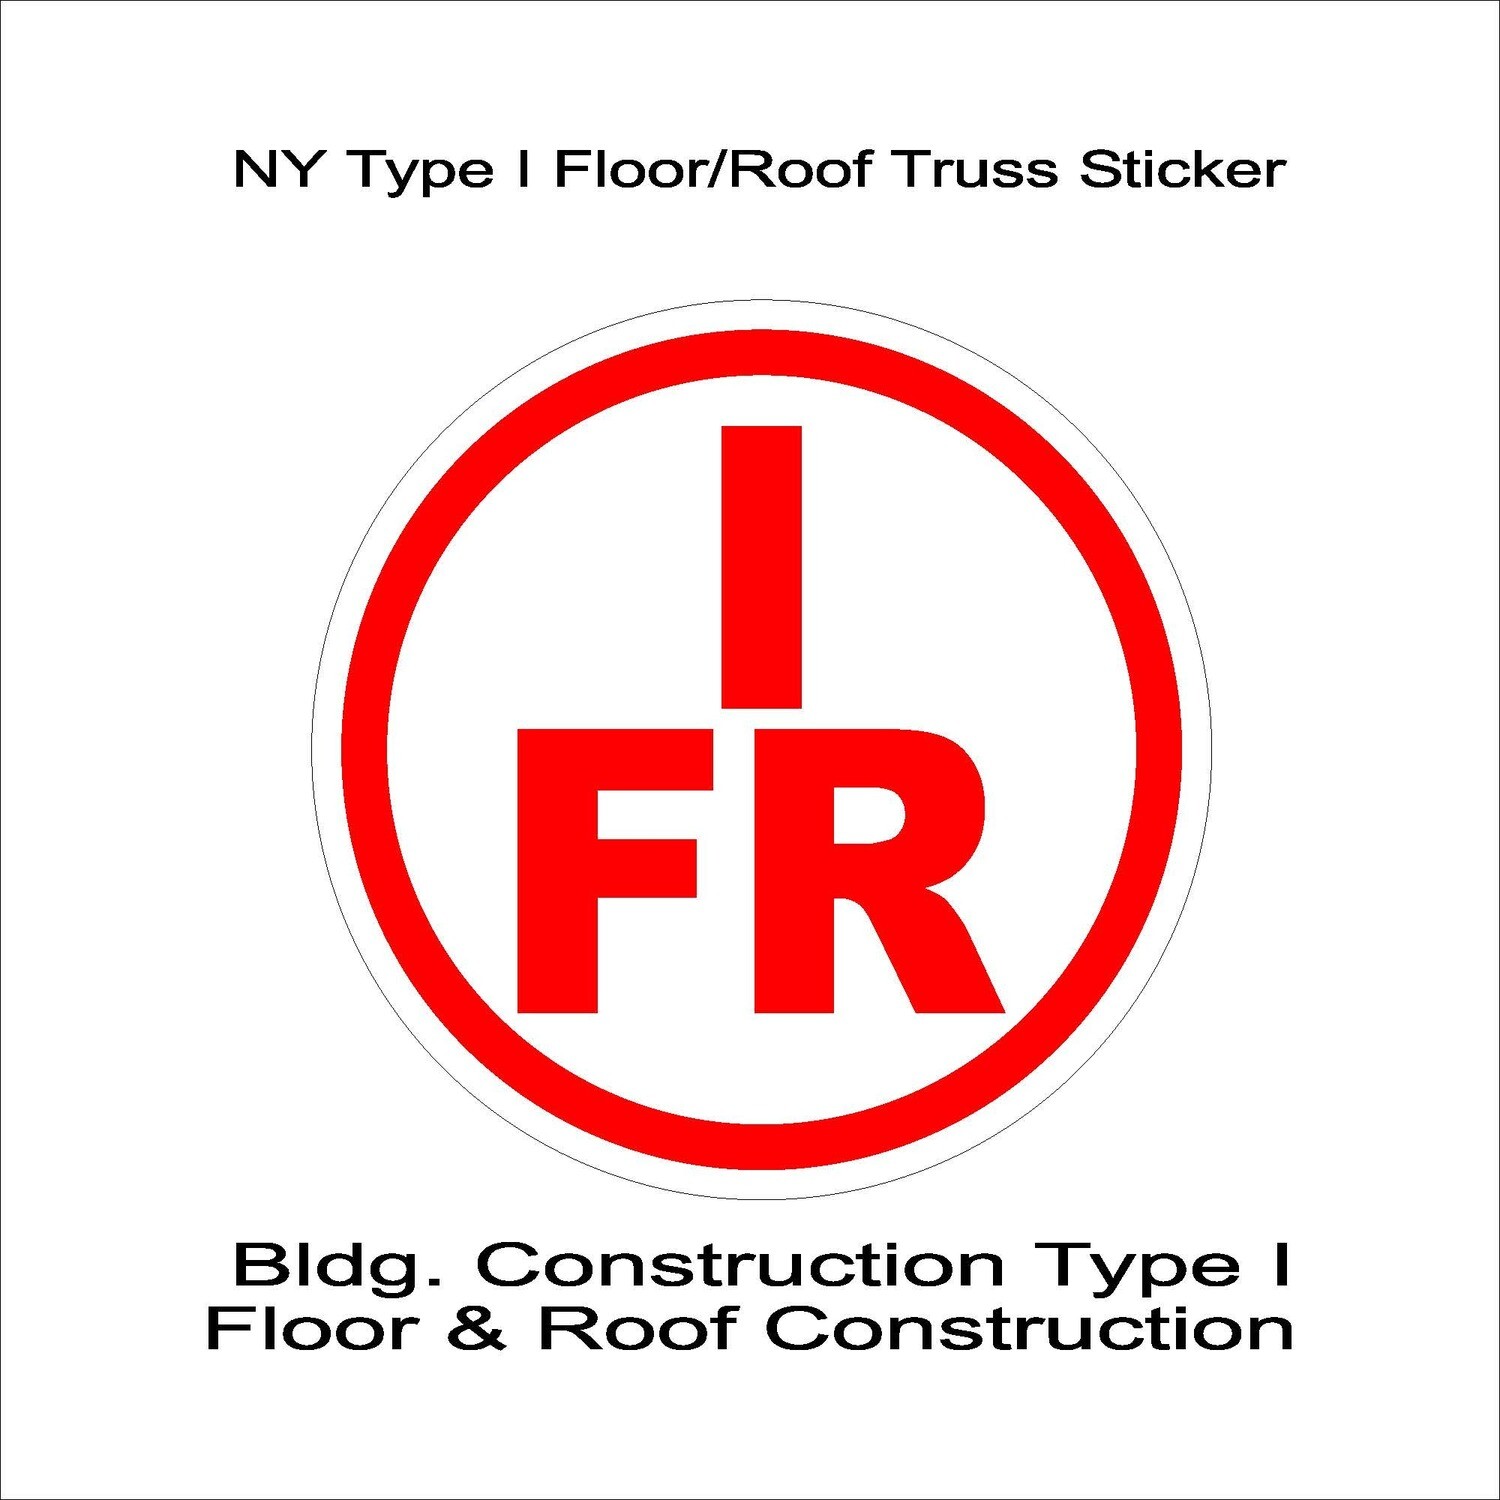 NY Type I Floor/Roof Truss Sticker